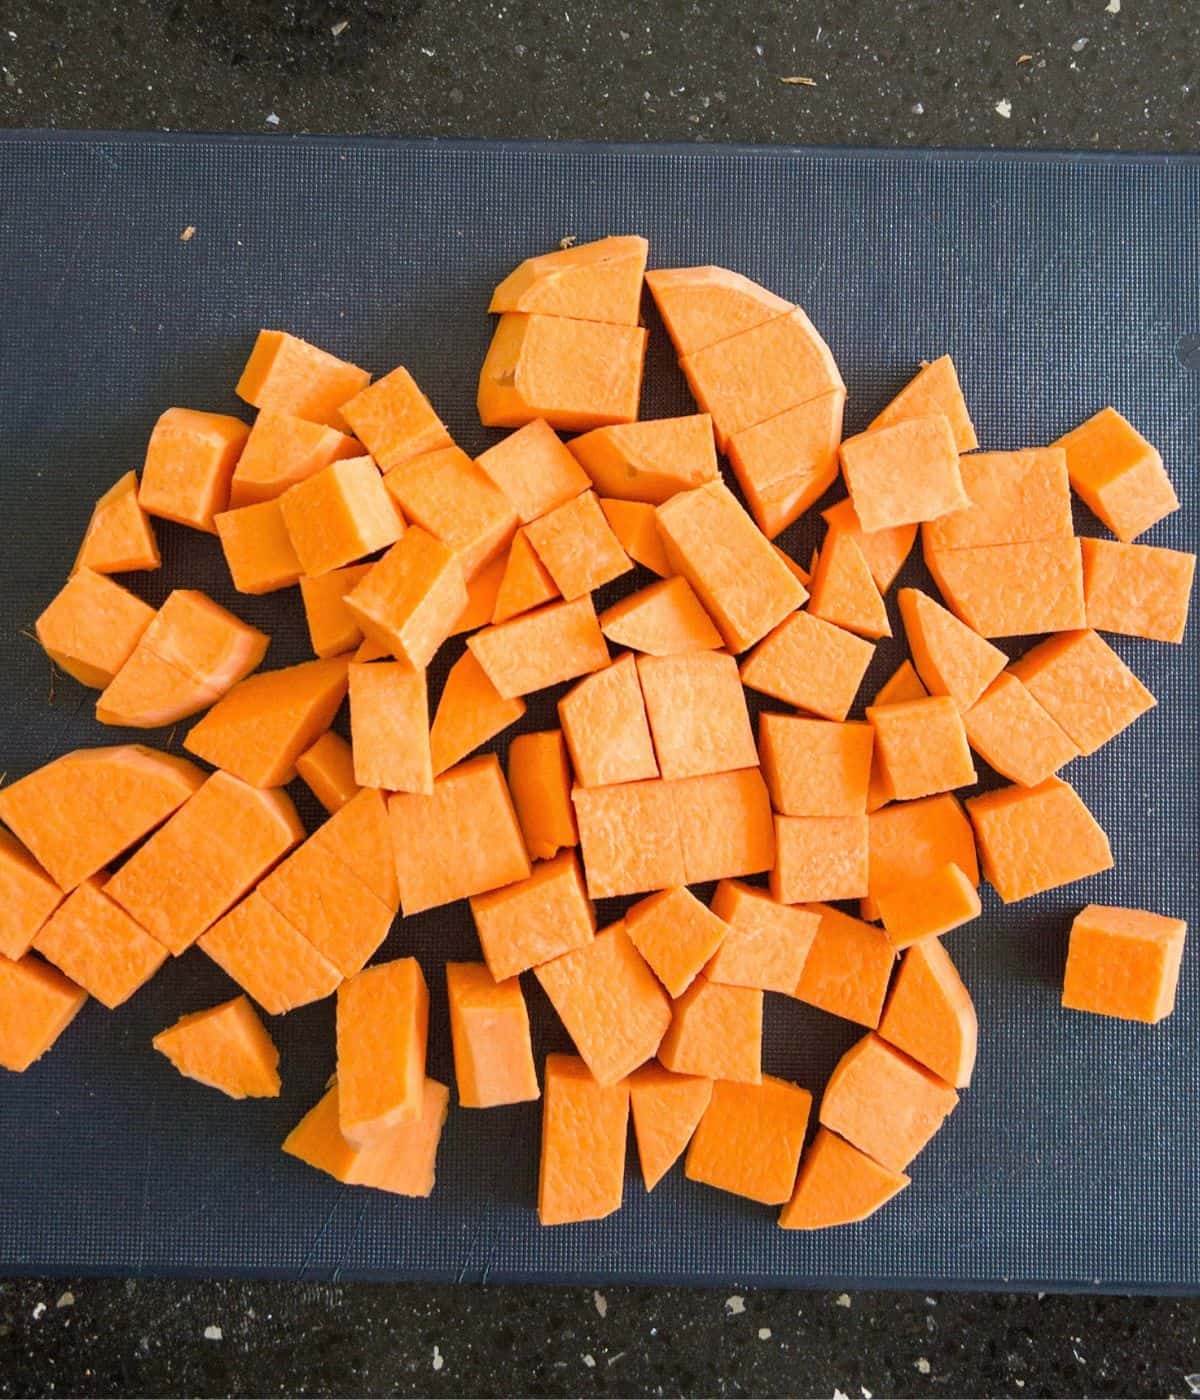 chopped chunks of sweet potato on a blue chopping board.